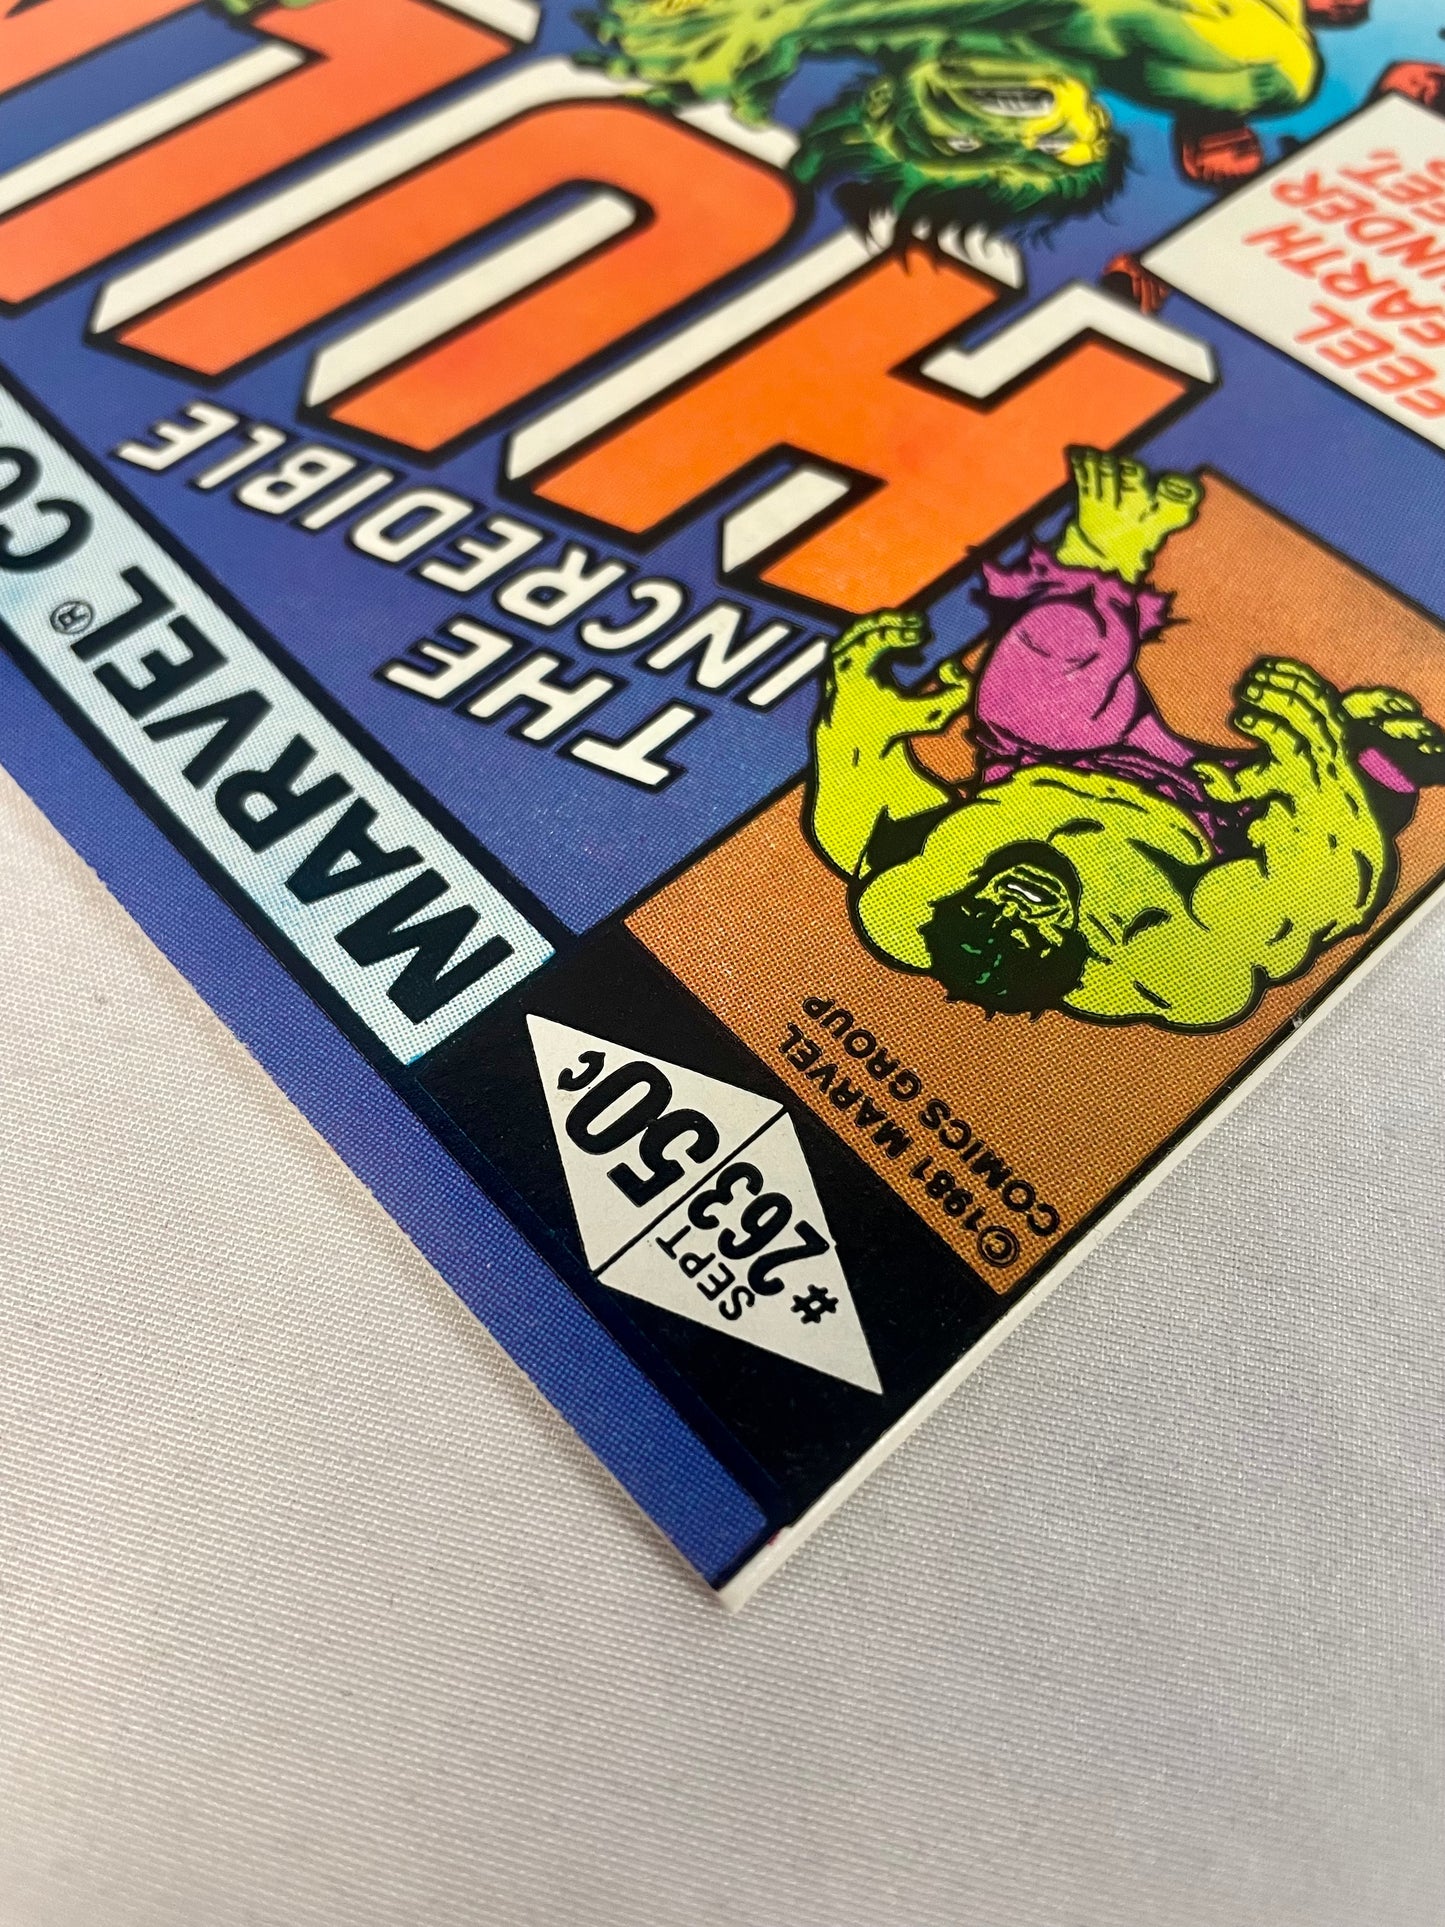 Marvel Comics The Incredible Hulk #263